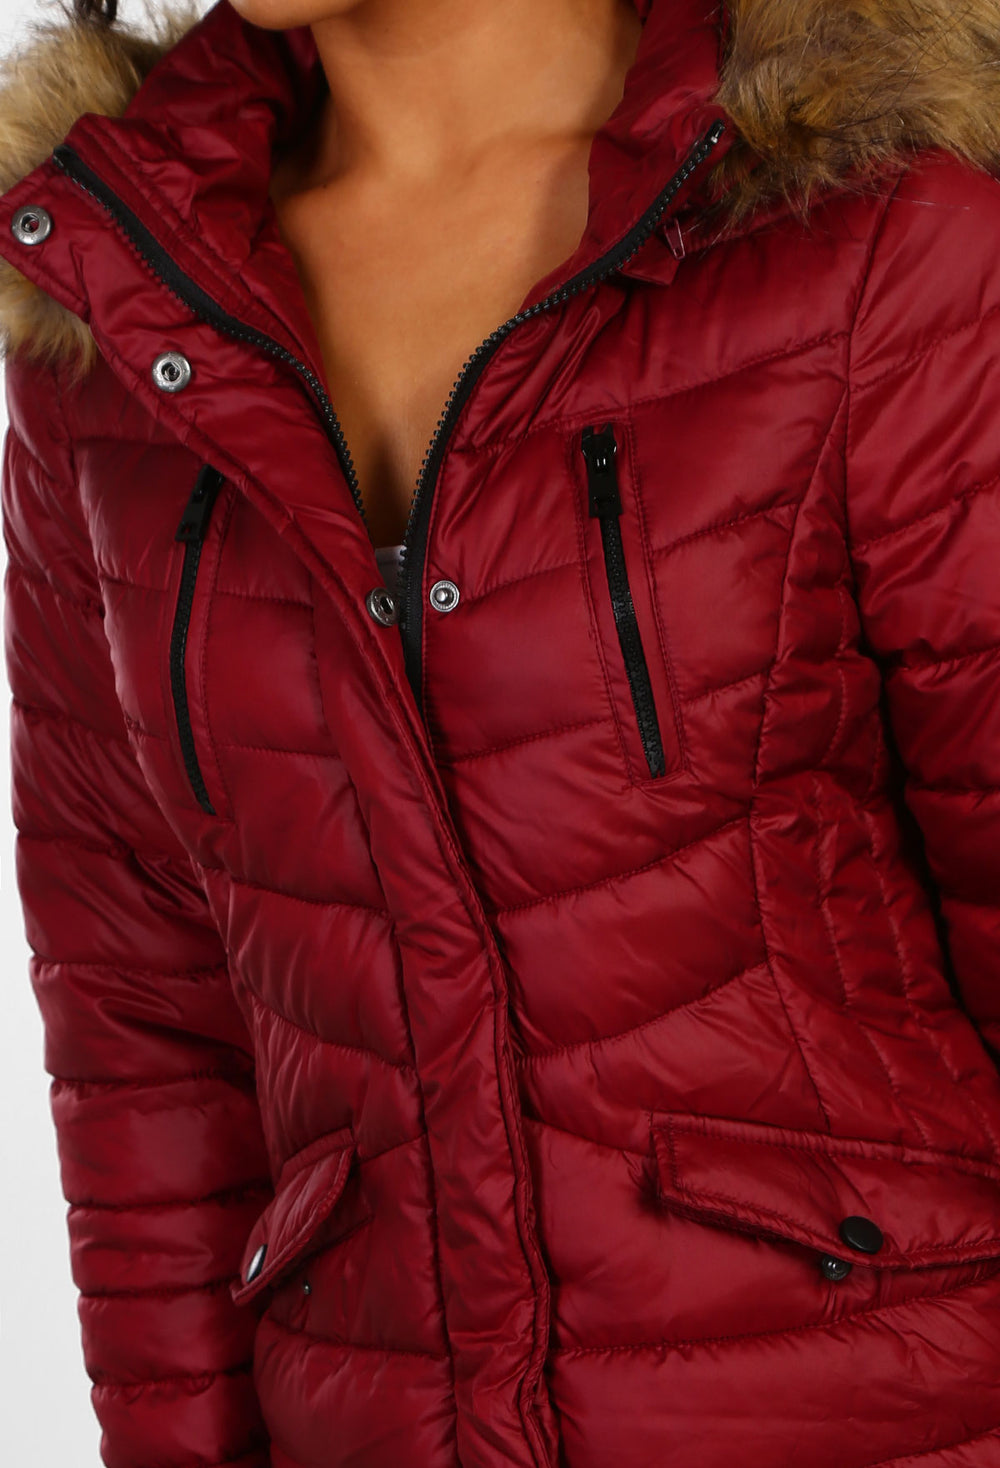 burgundy winter coat with fur hood